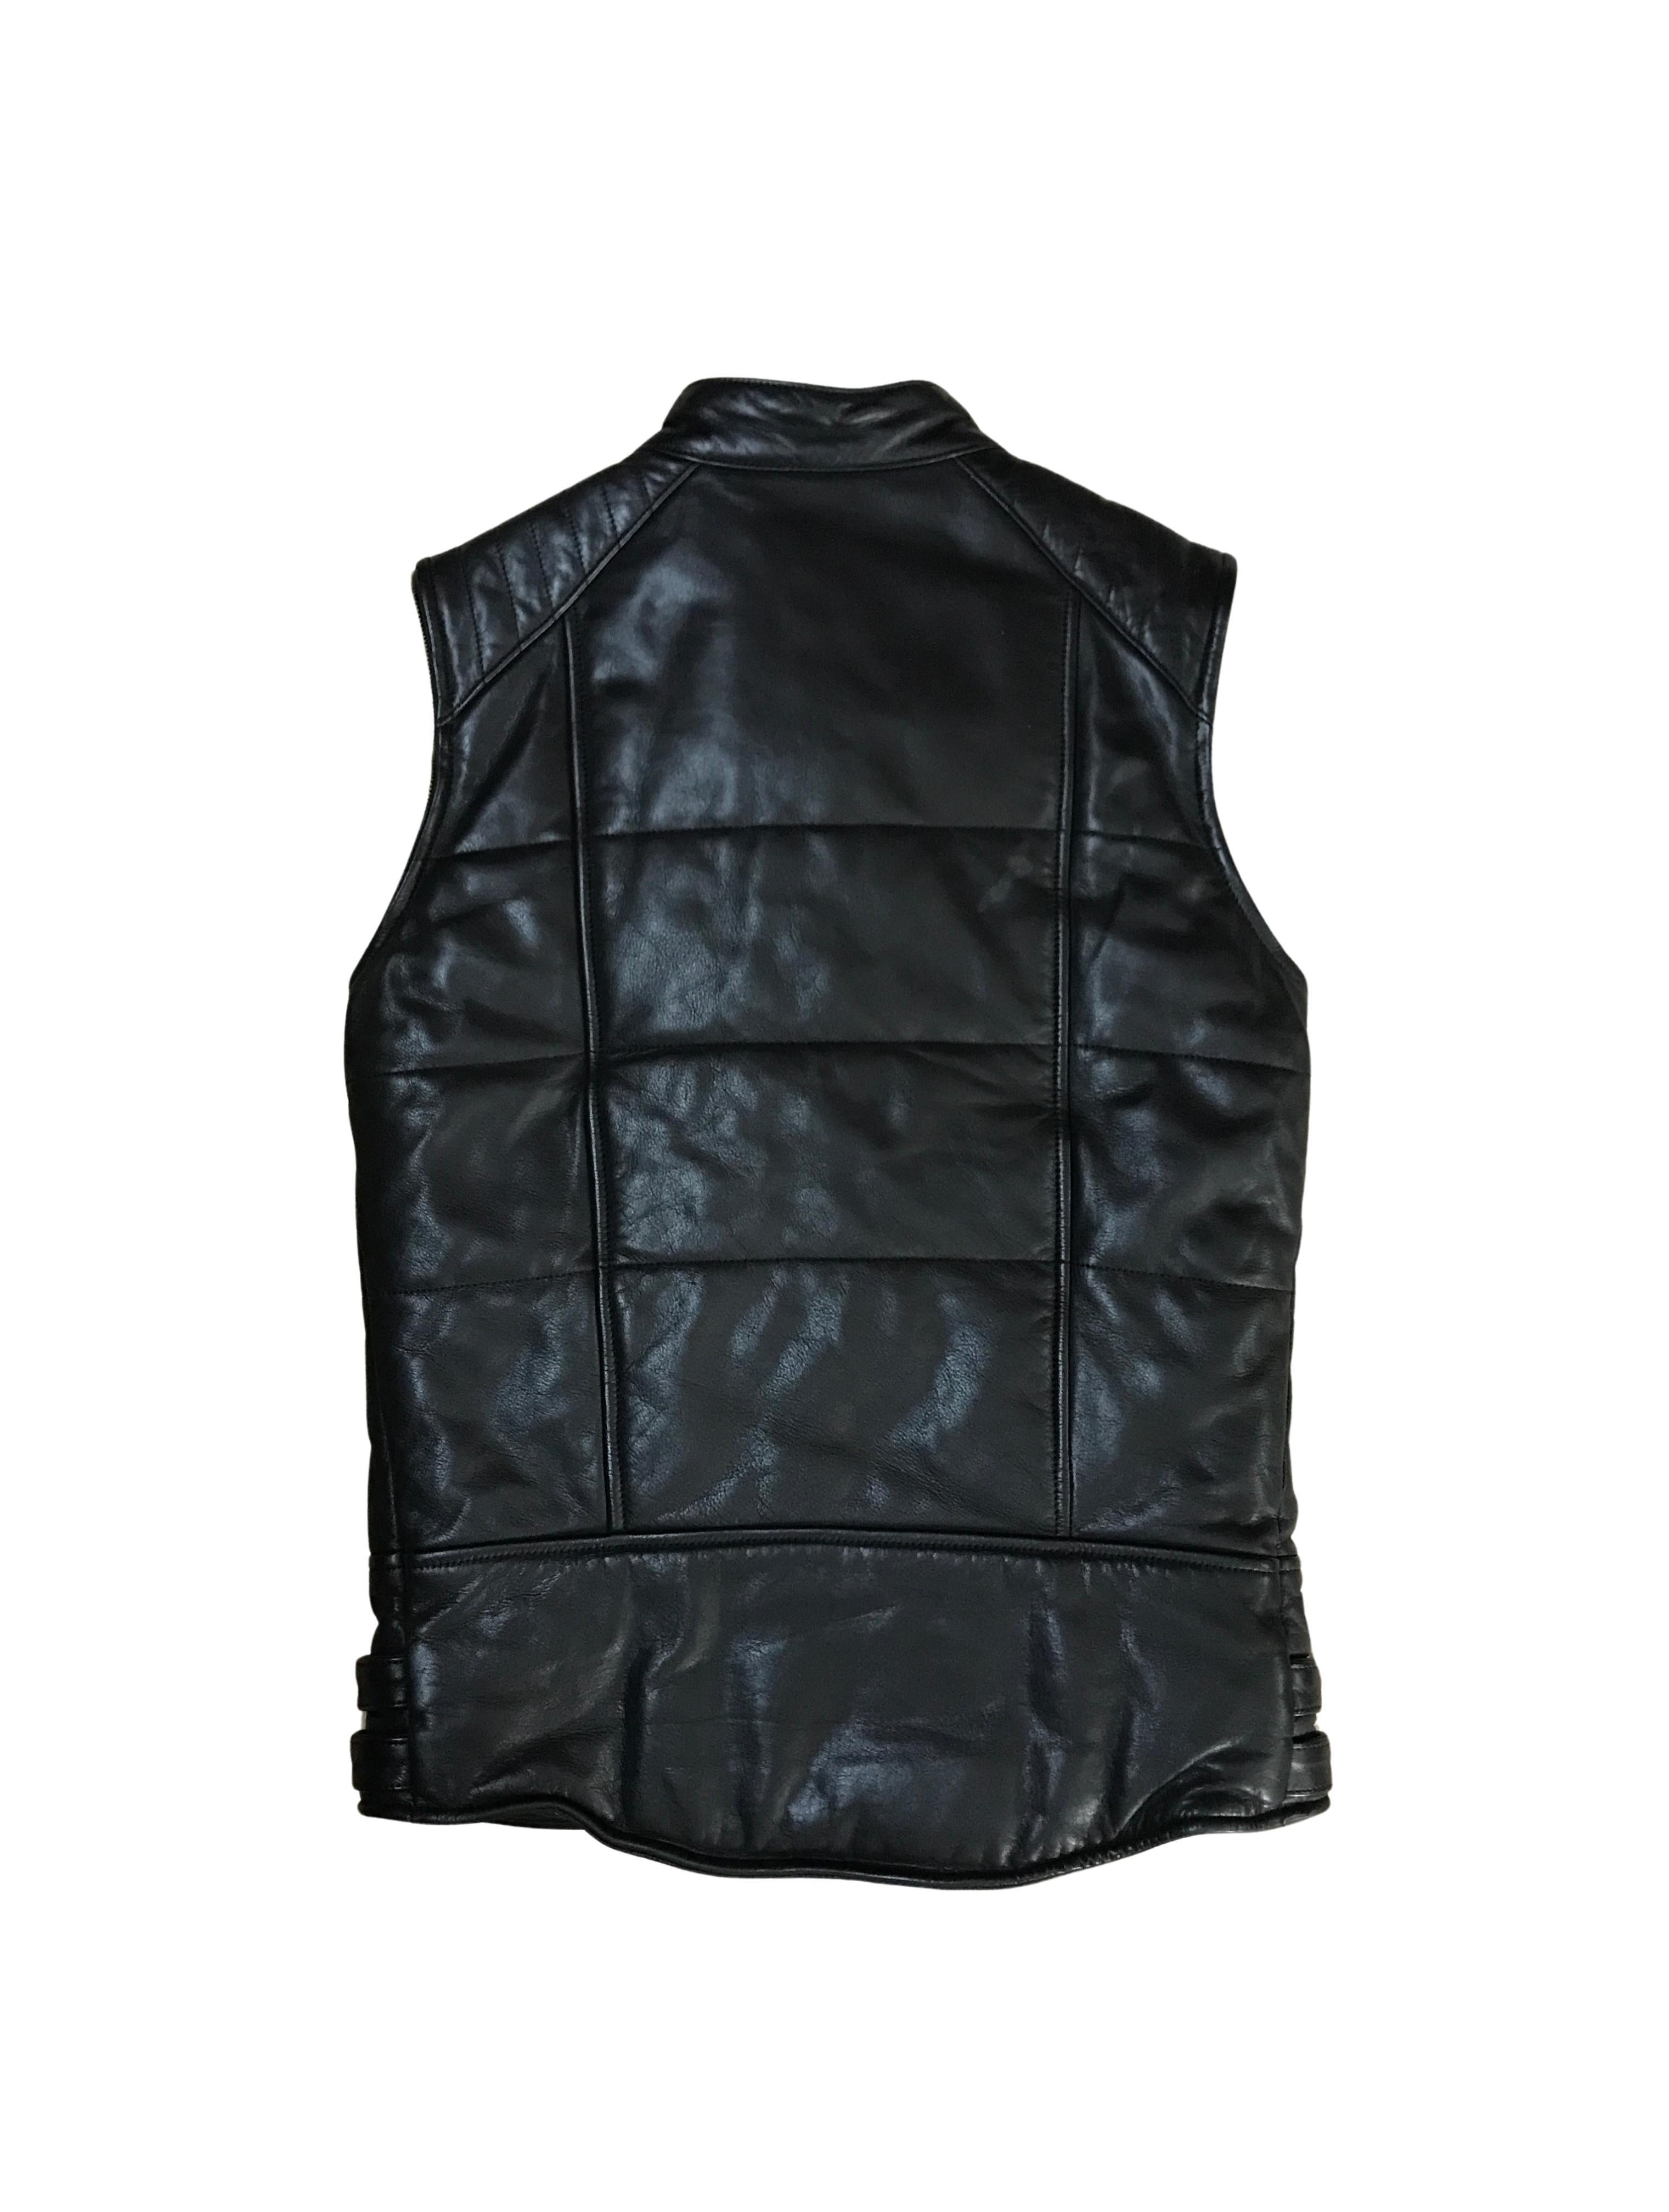 Blackmeans Puffy Riders Jacket w/ Detachable Sleeves 2